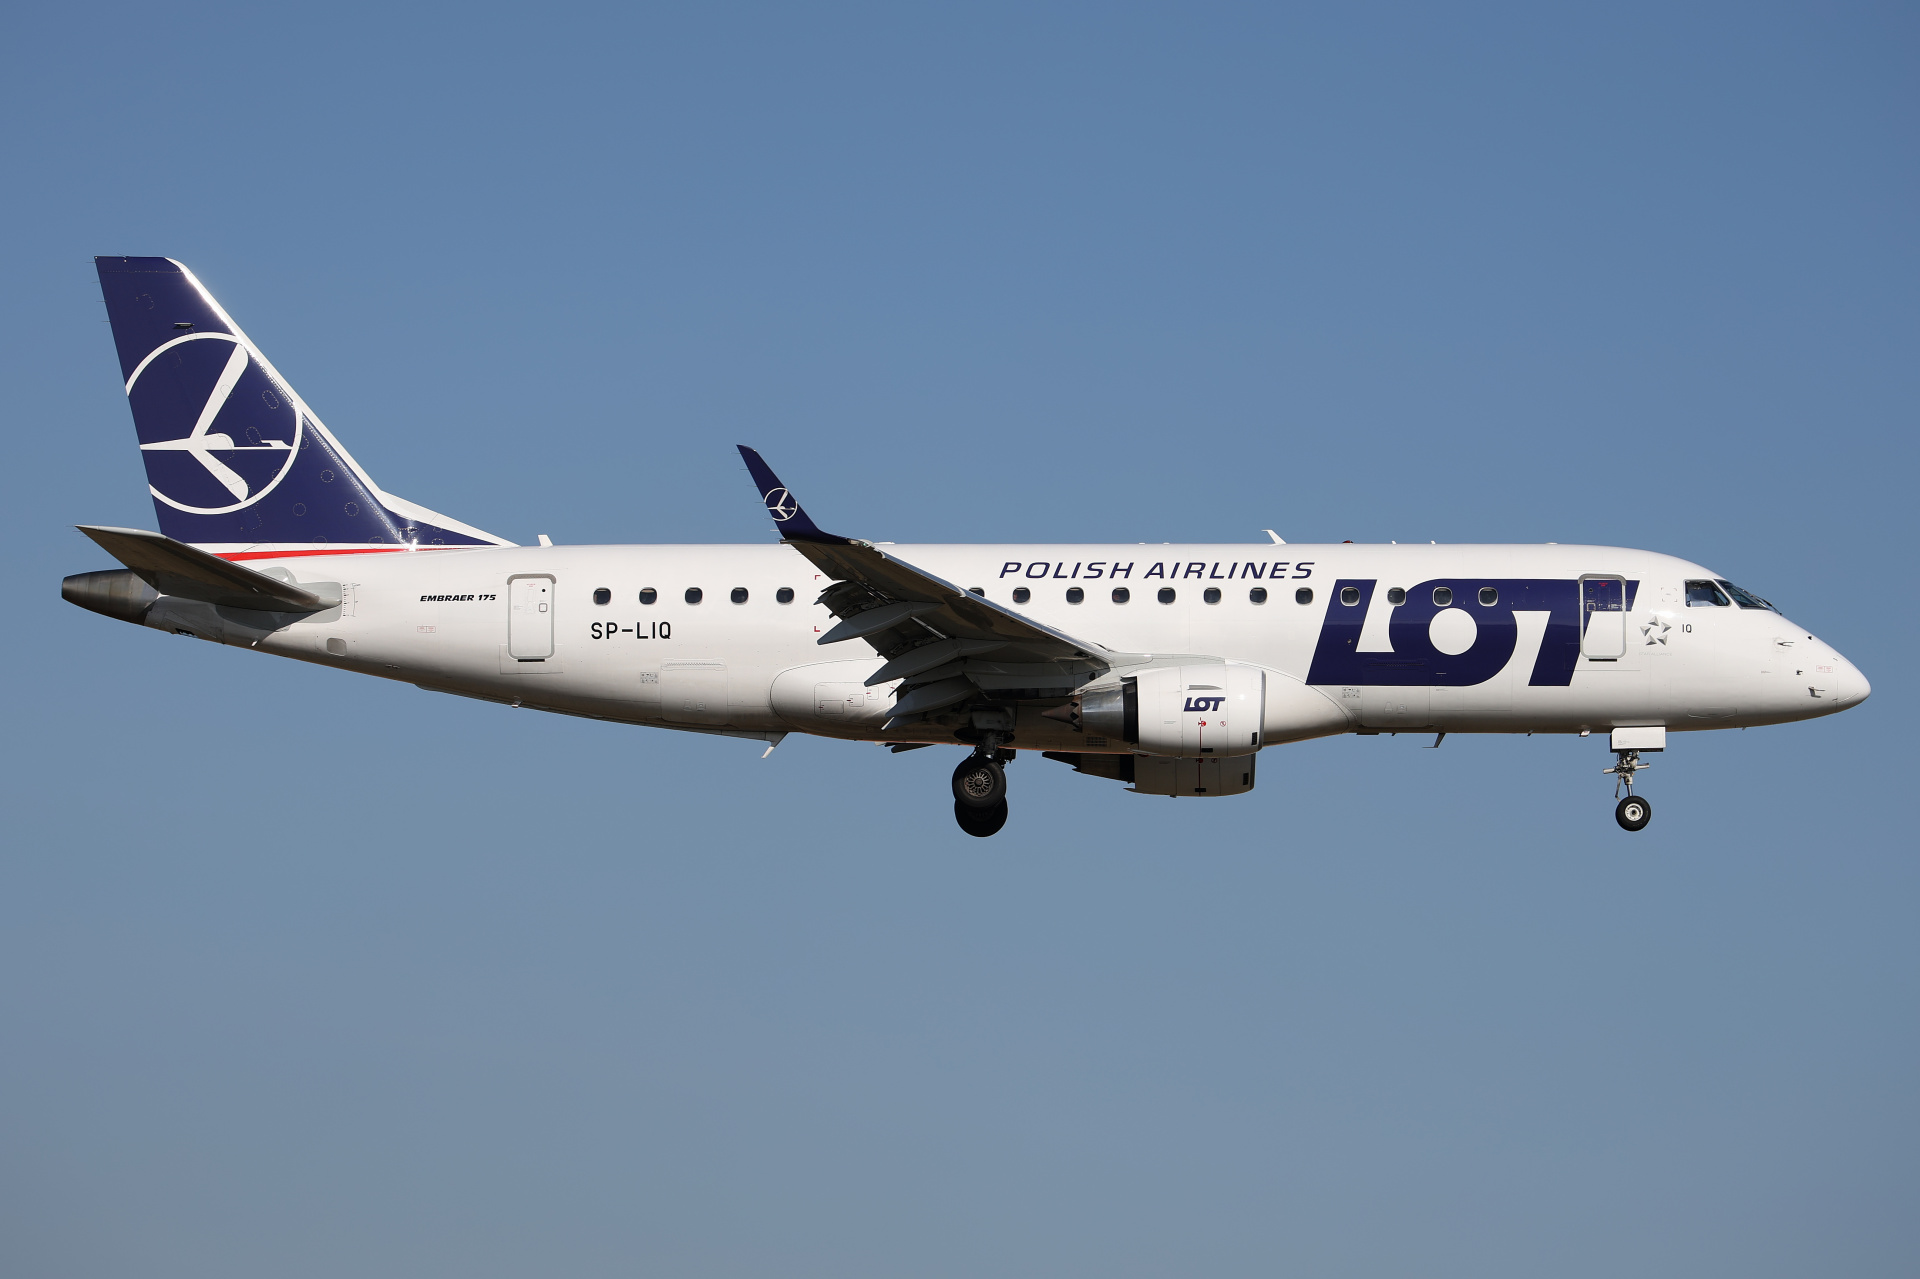 SP-LIQ (Aircraft » EPWA Spotting » Embraer E175 » LOT Polish Airlines)